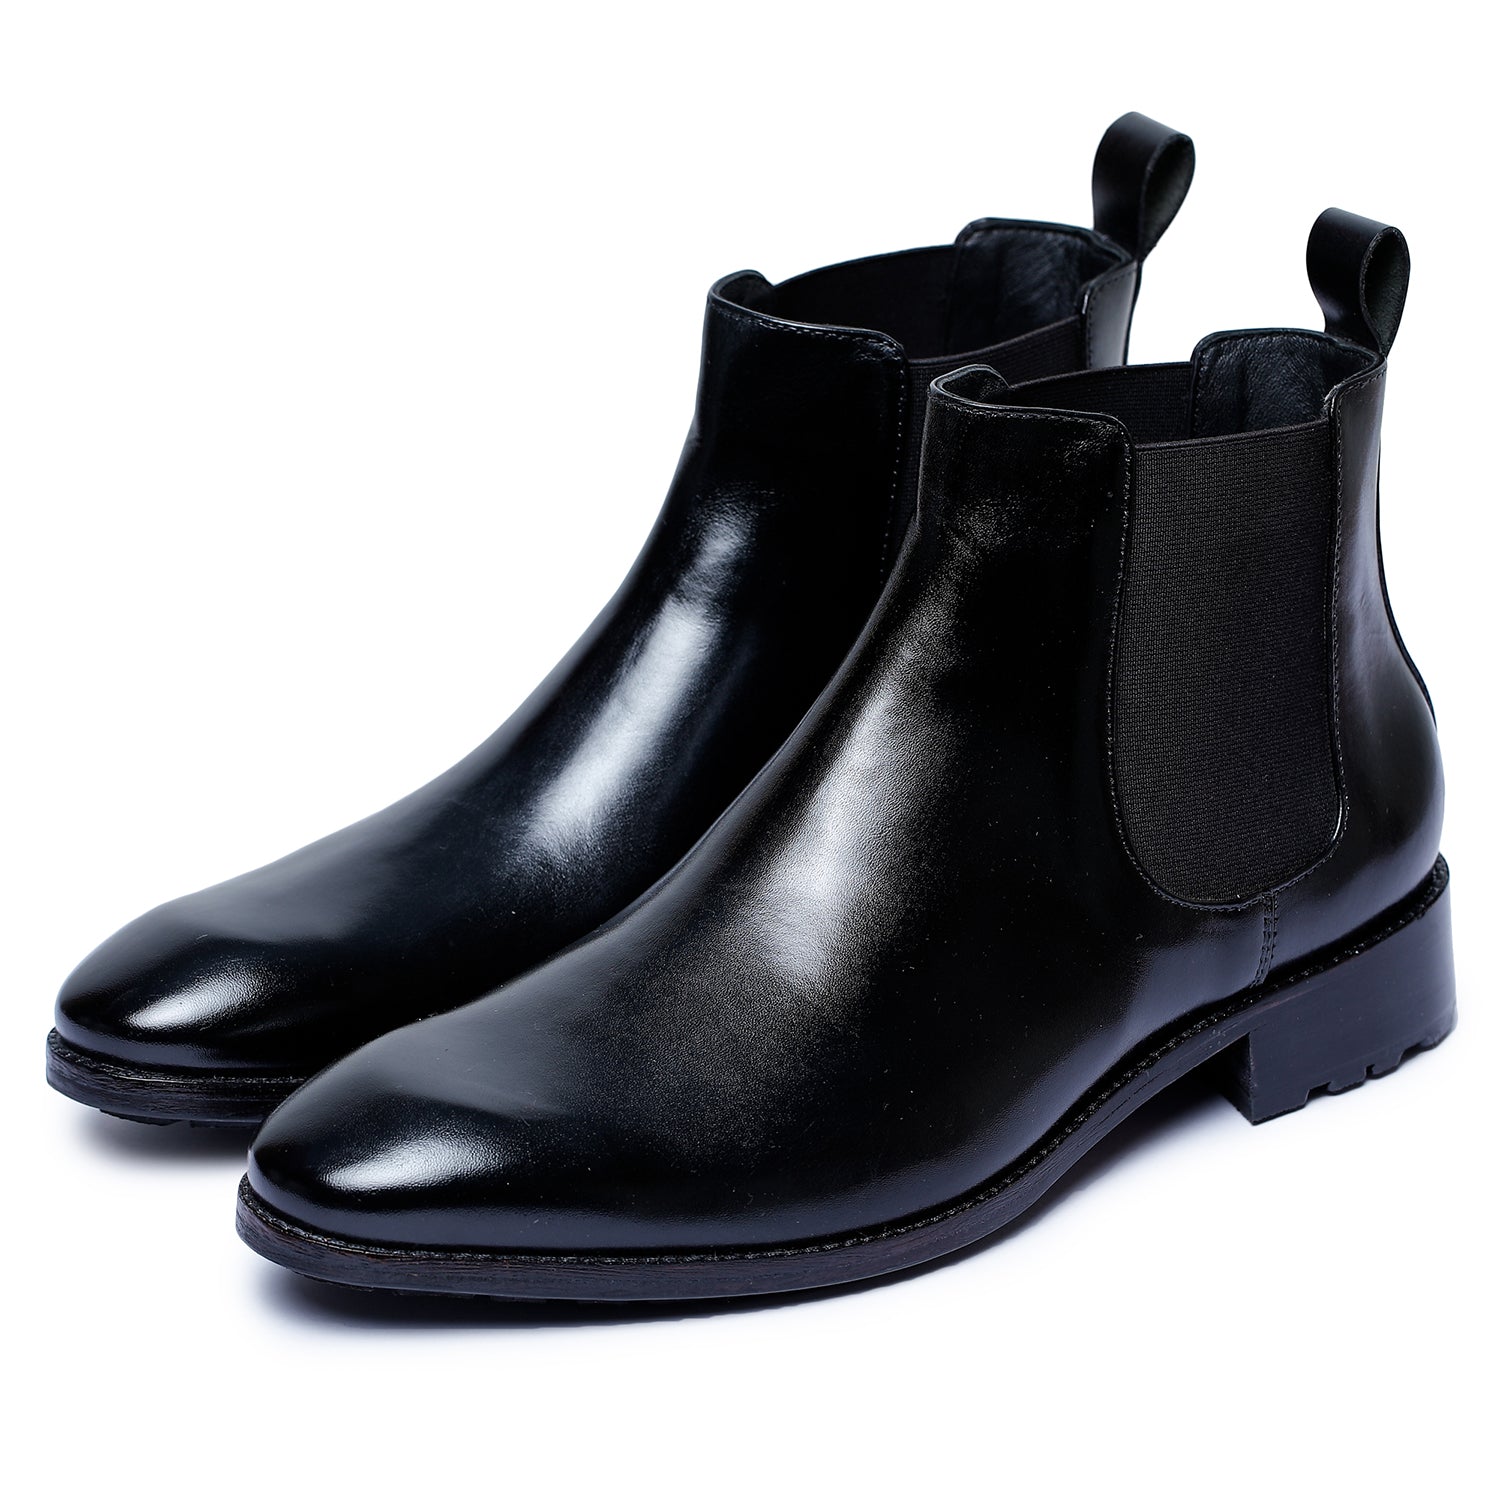 Men's Boots, Black, Chelsea & Leather Boots